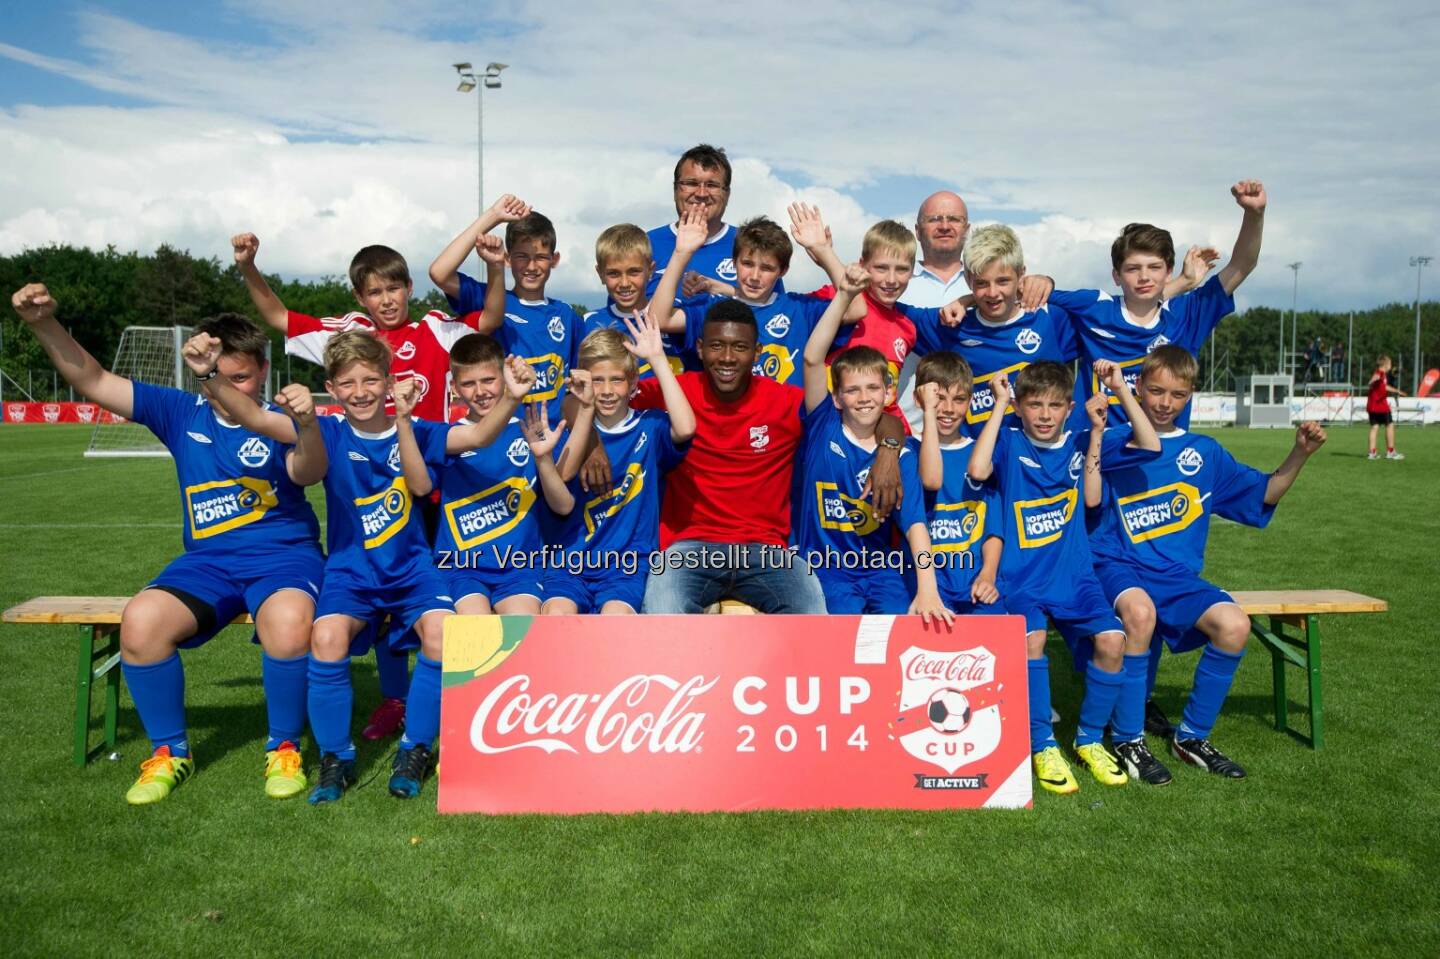 David Alaba mit der Mannschaft des SV Horn, Coca-Cola Cup, Bundesfinale.
Foto: GEPA pictures/ Martin Hoermandinger